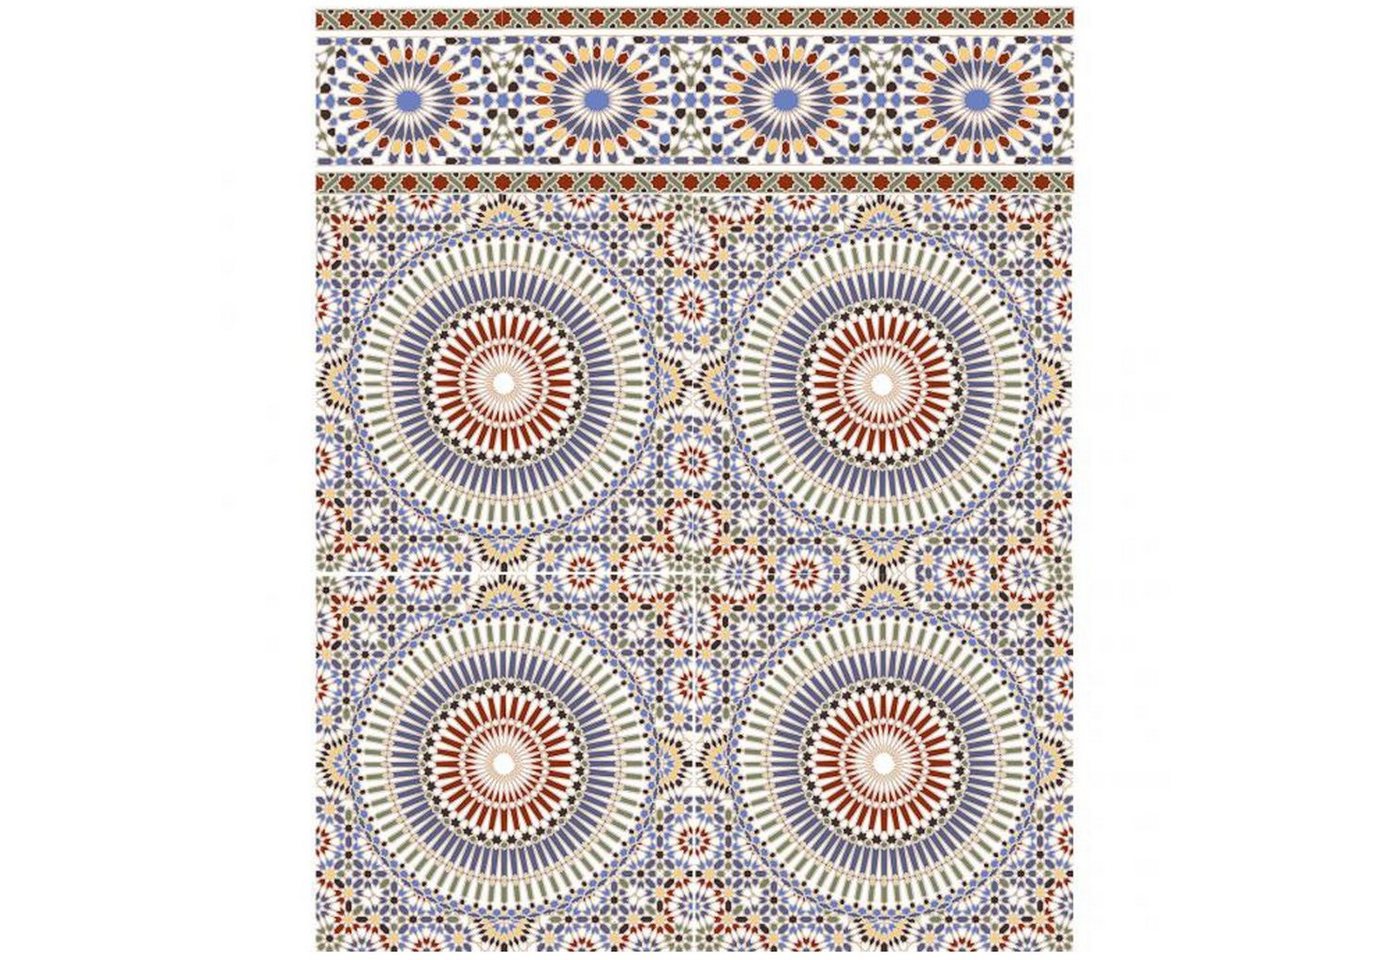 Casa Moro Wandfliese Marokkanische Wand-Fliesen Tanger 20x20 cm bunt mit Mosaik-Muster, Orientalische Wandfliesen für Küche Badezimmer Flur Küchenrückwand (1 Quadratmeter), FL16011, Mehrfarbig von Casa Moro